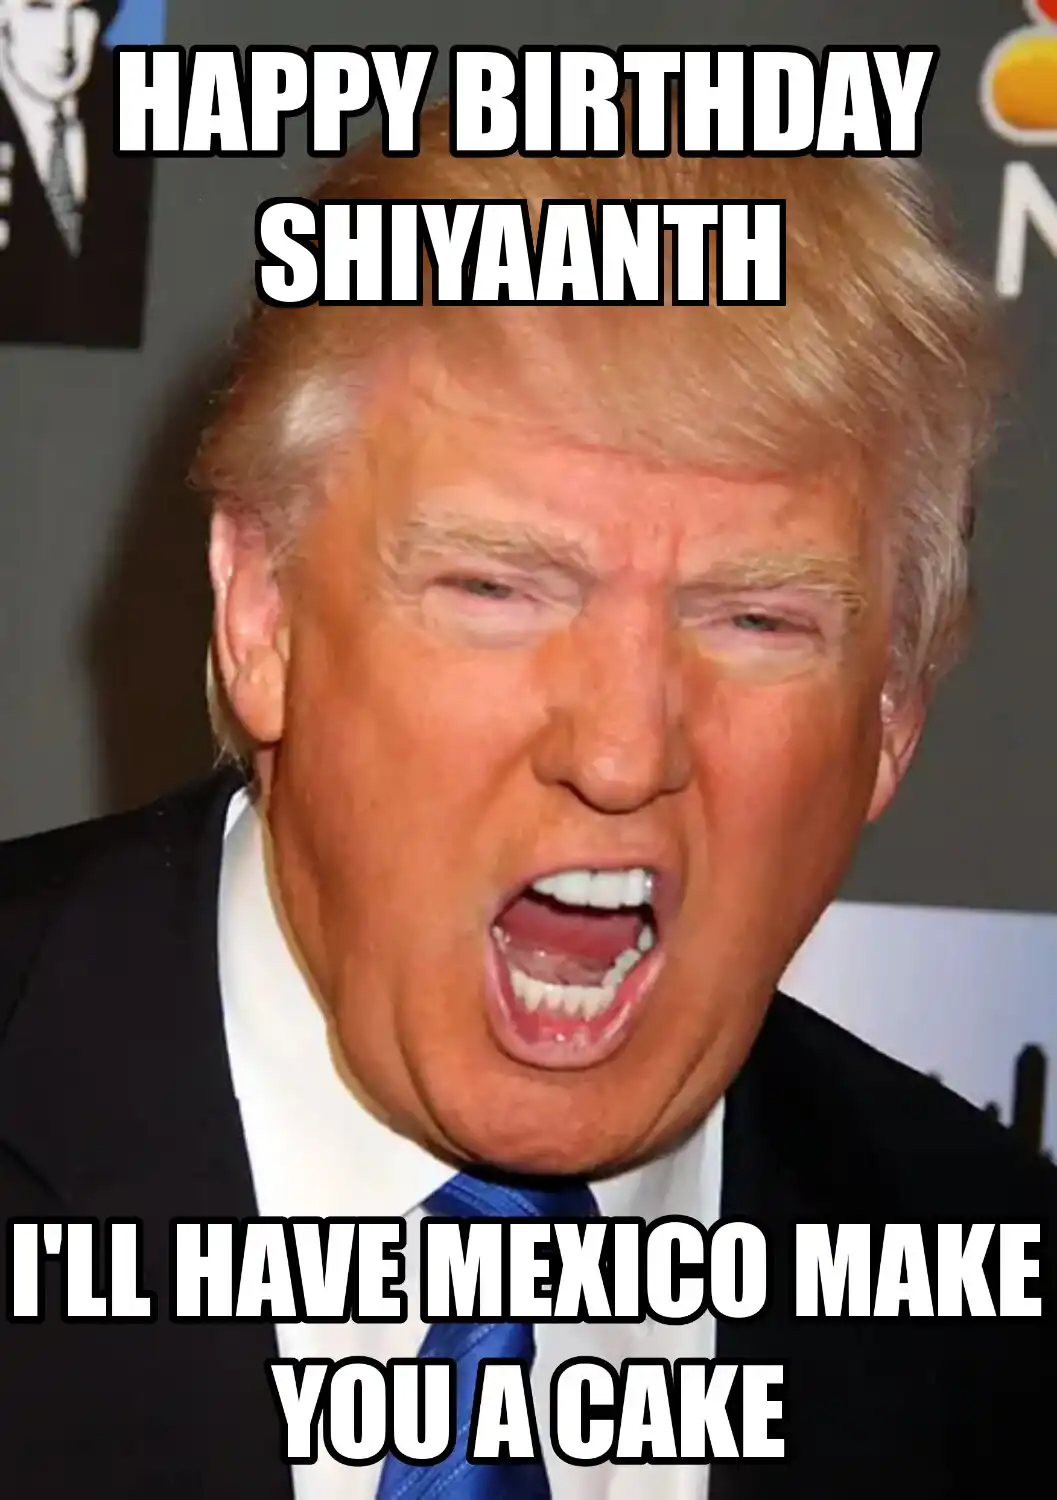 Happy Birthday Shiyaanth Mexico Make You A Cake Meme